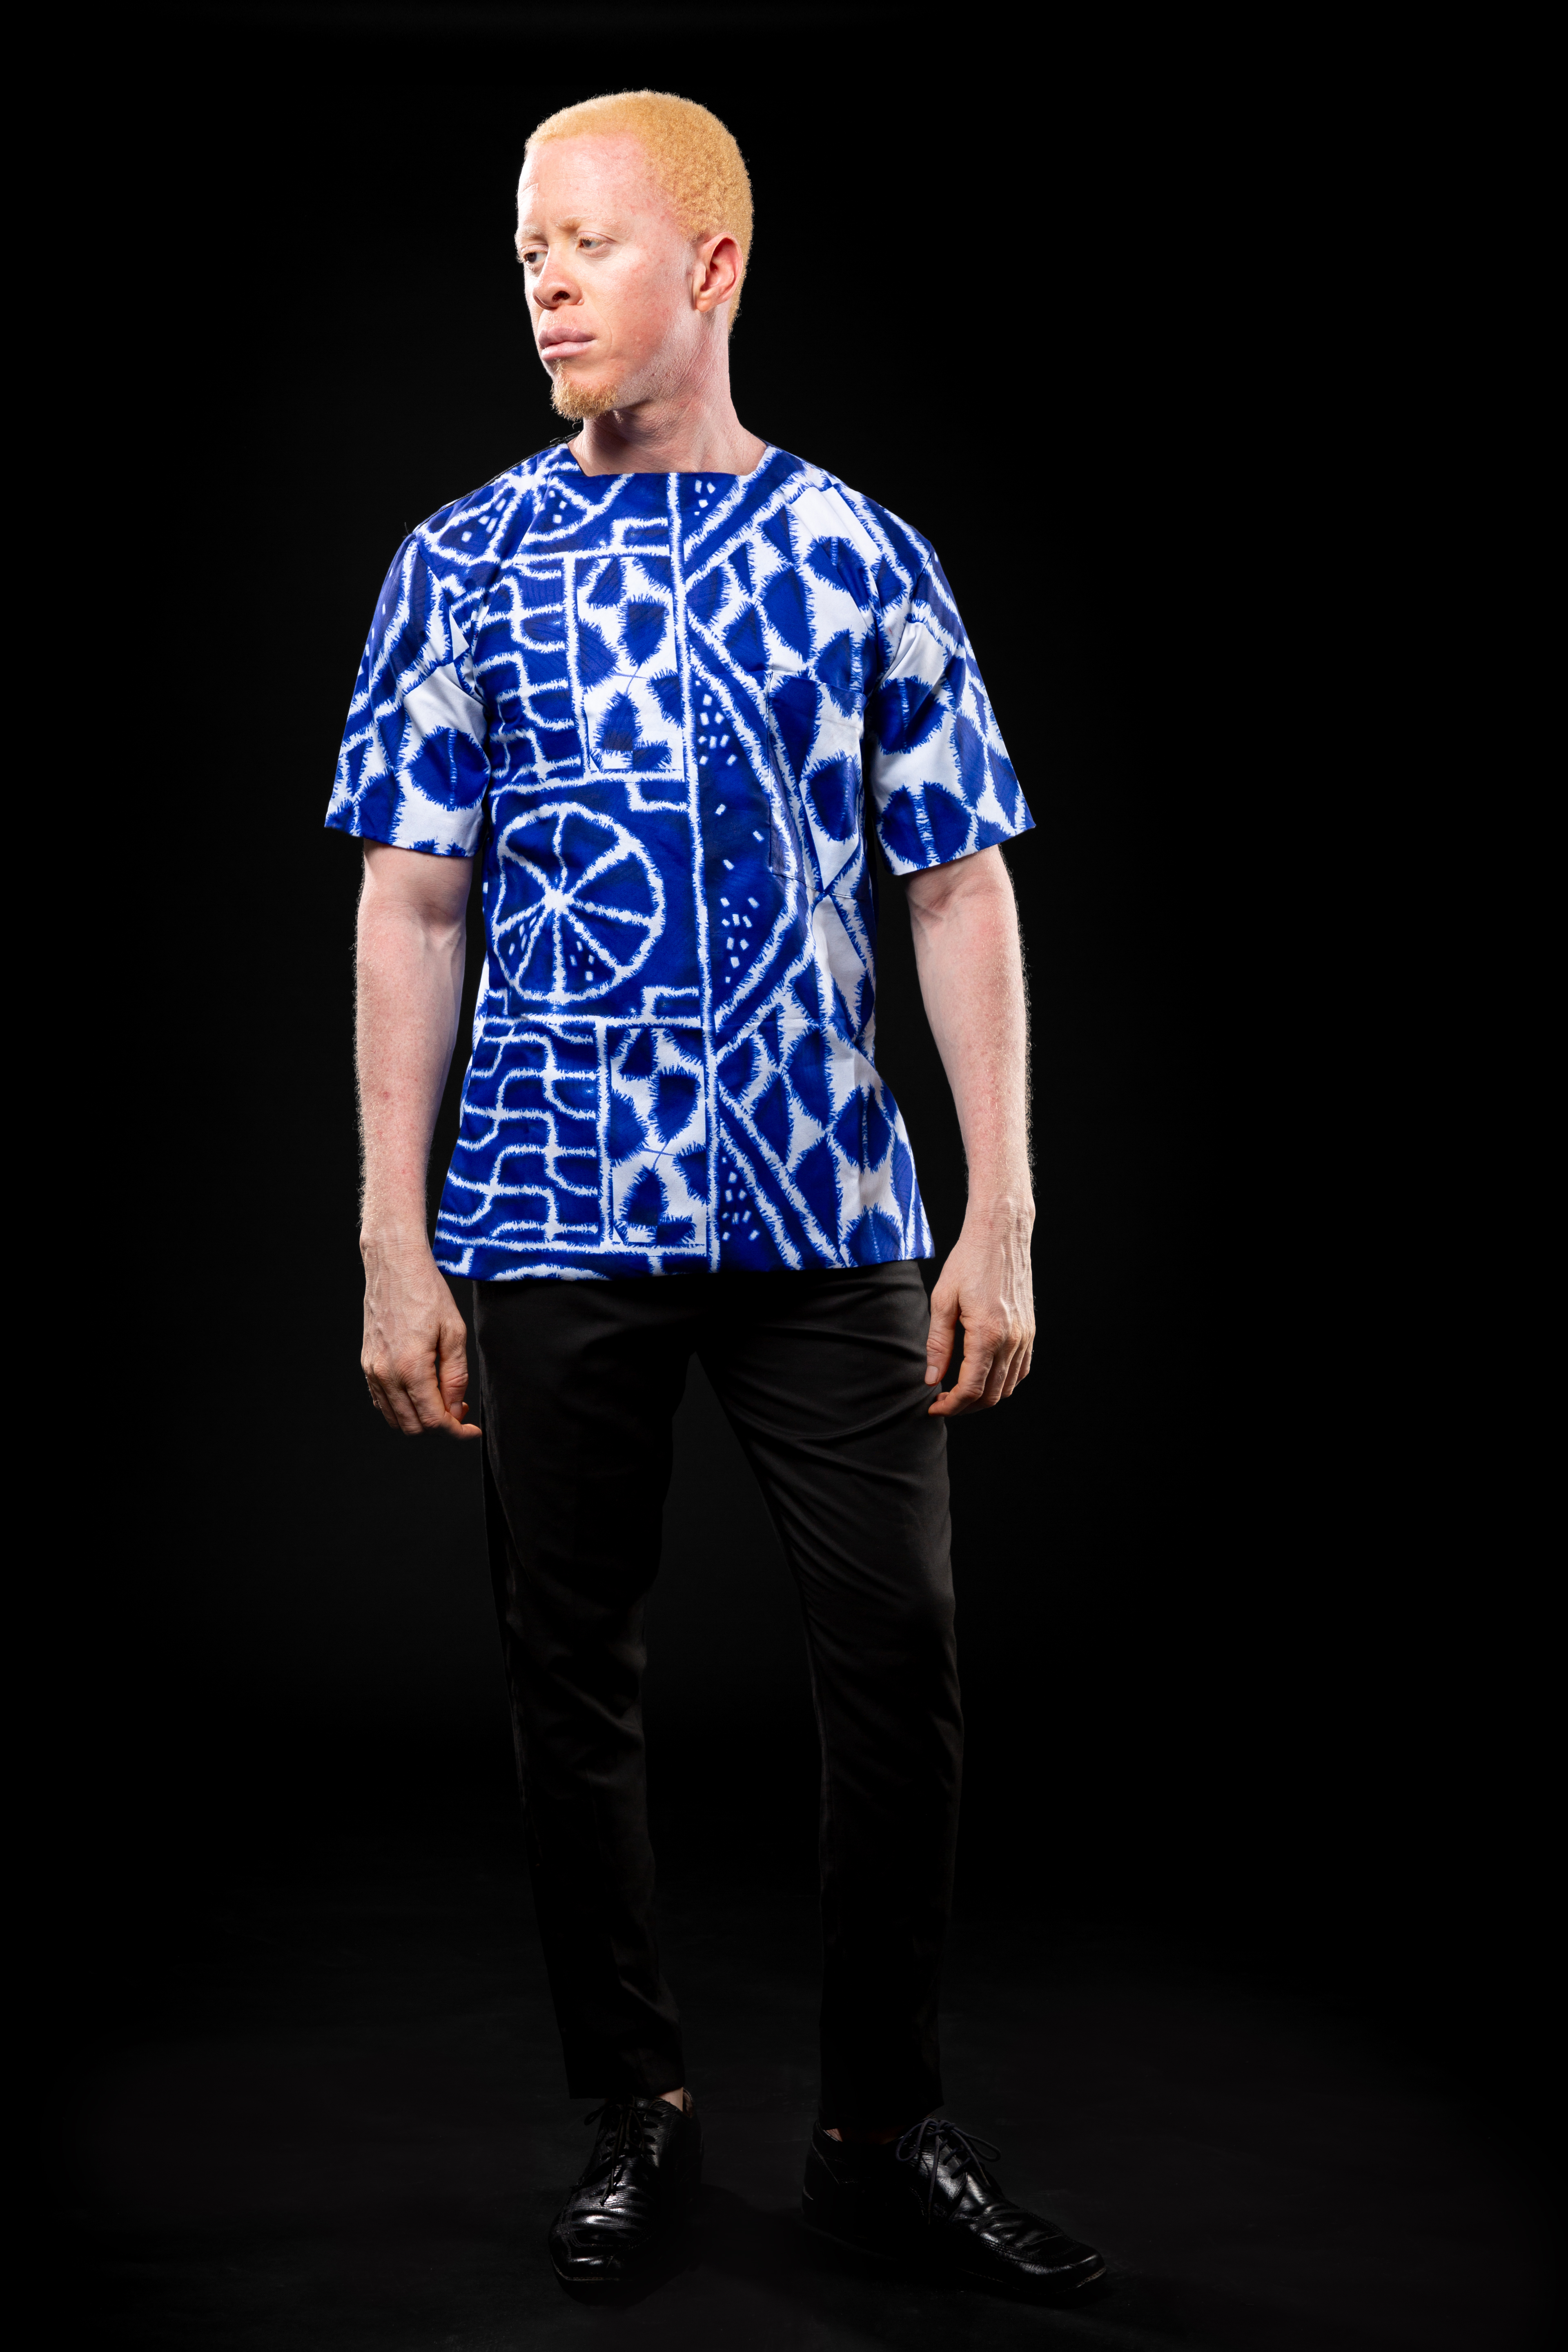 Image 2 of Blue ndop shirt (Dikalo)